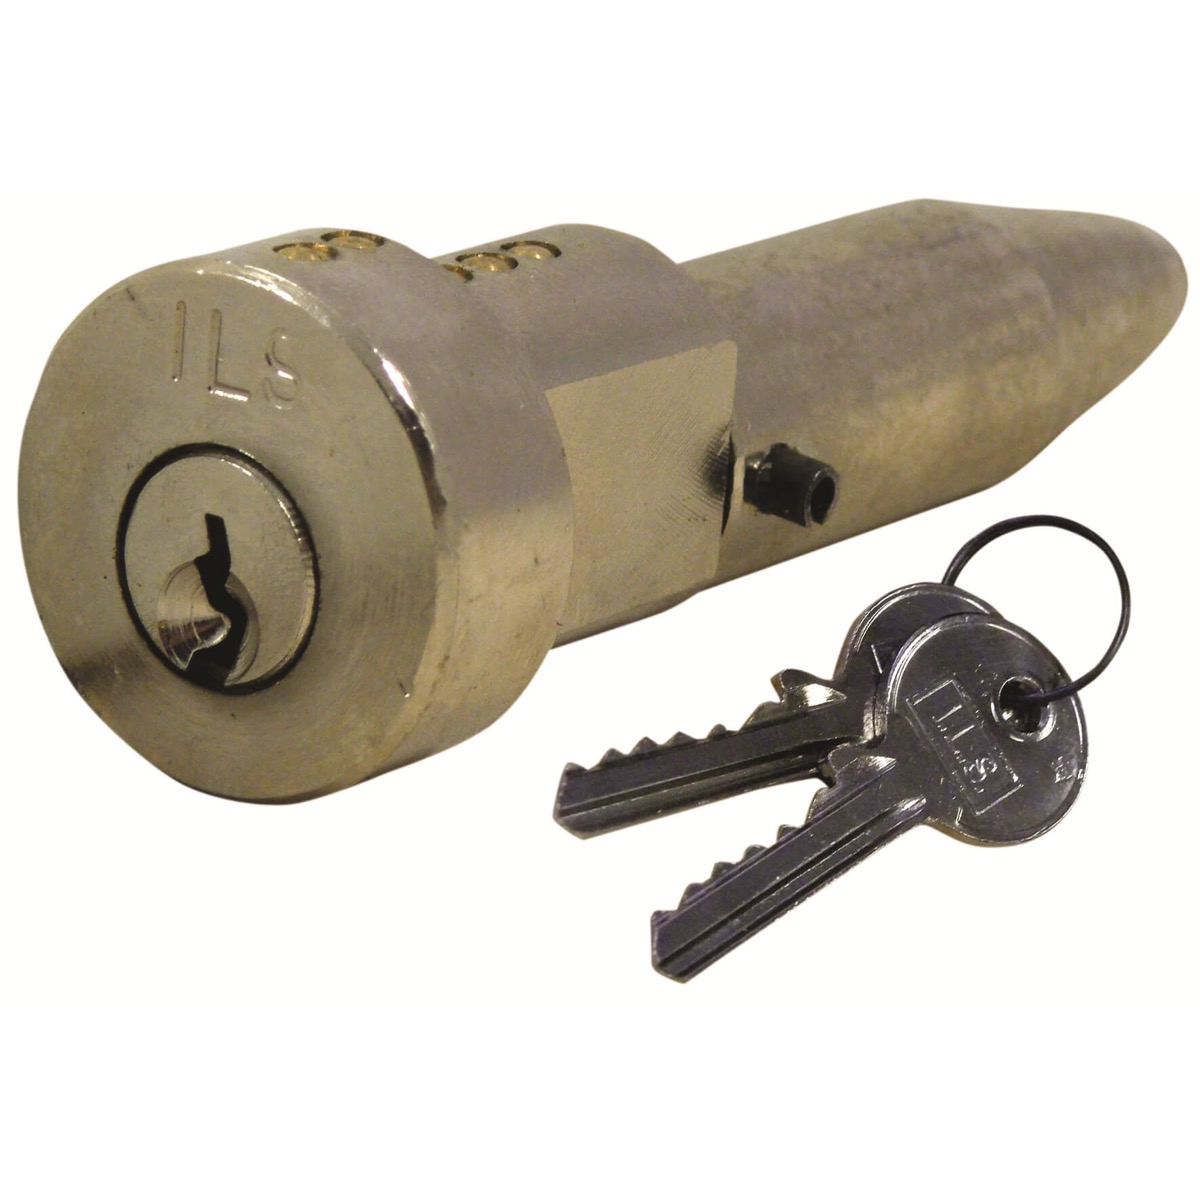 ILS Roller Shutter Bullet Lock - Round Face 24mm Diameter With Black Roll Pin